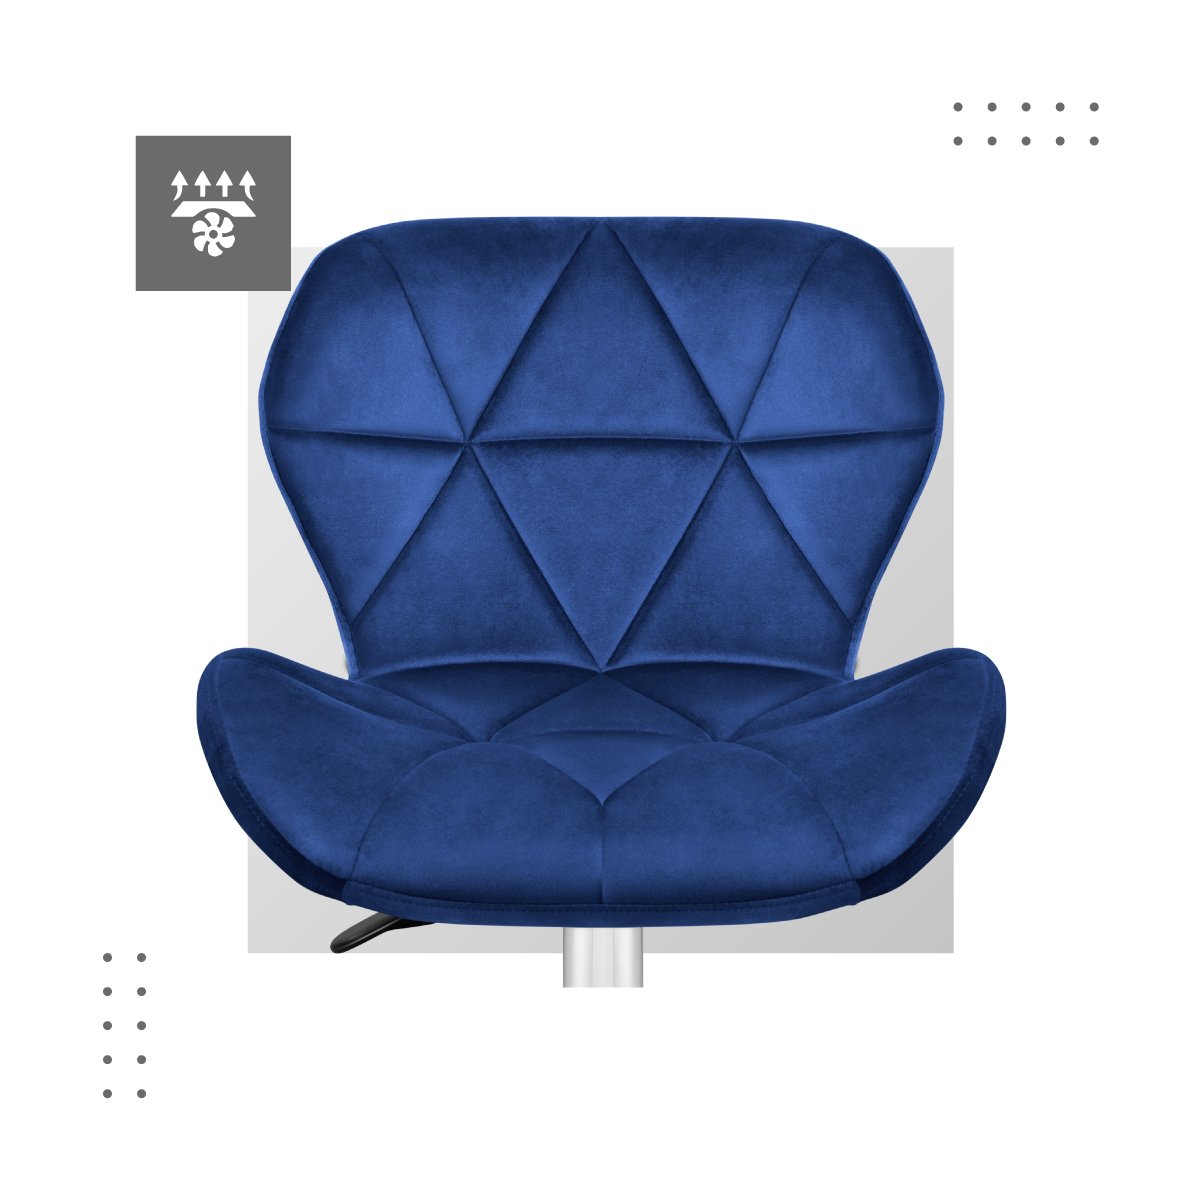 Fotel biurowy Mark Adler Future 3.0 Navy blue materiały